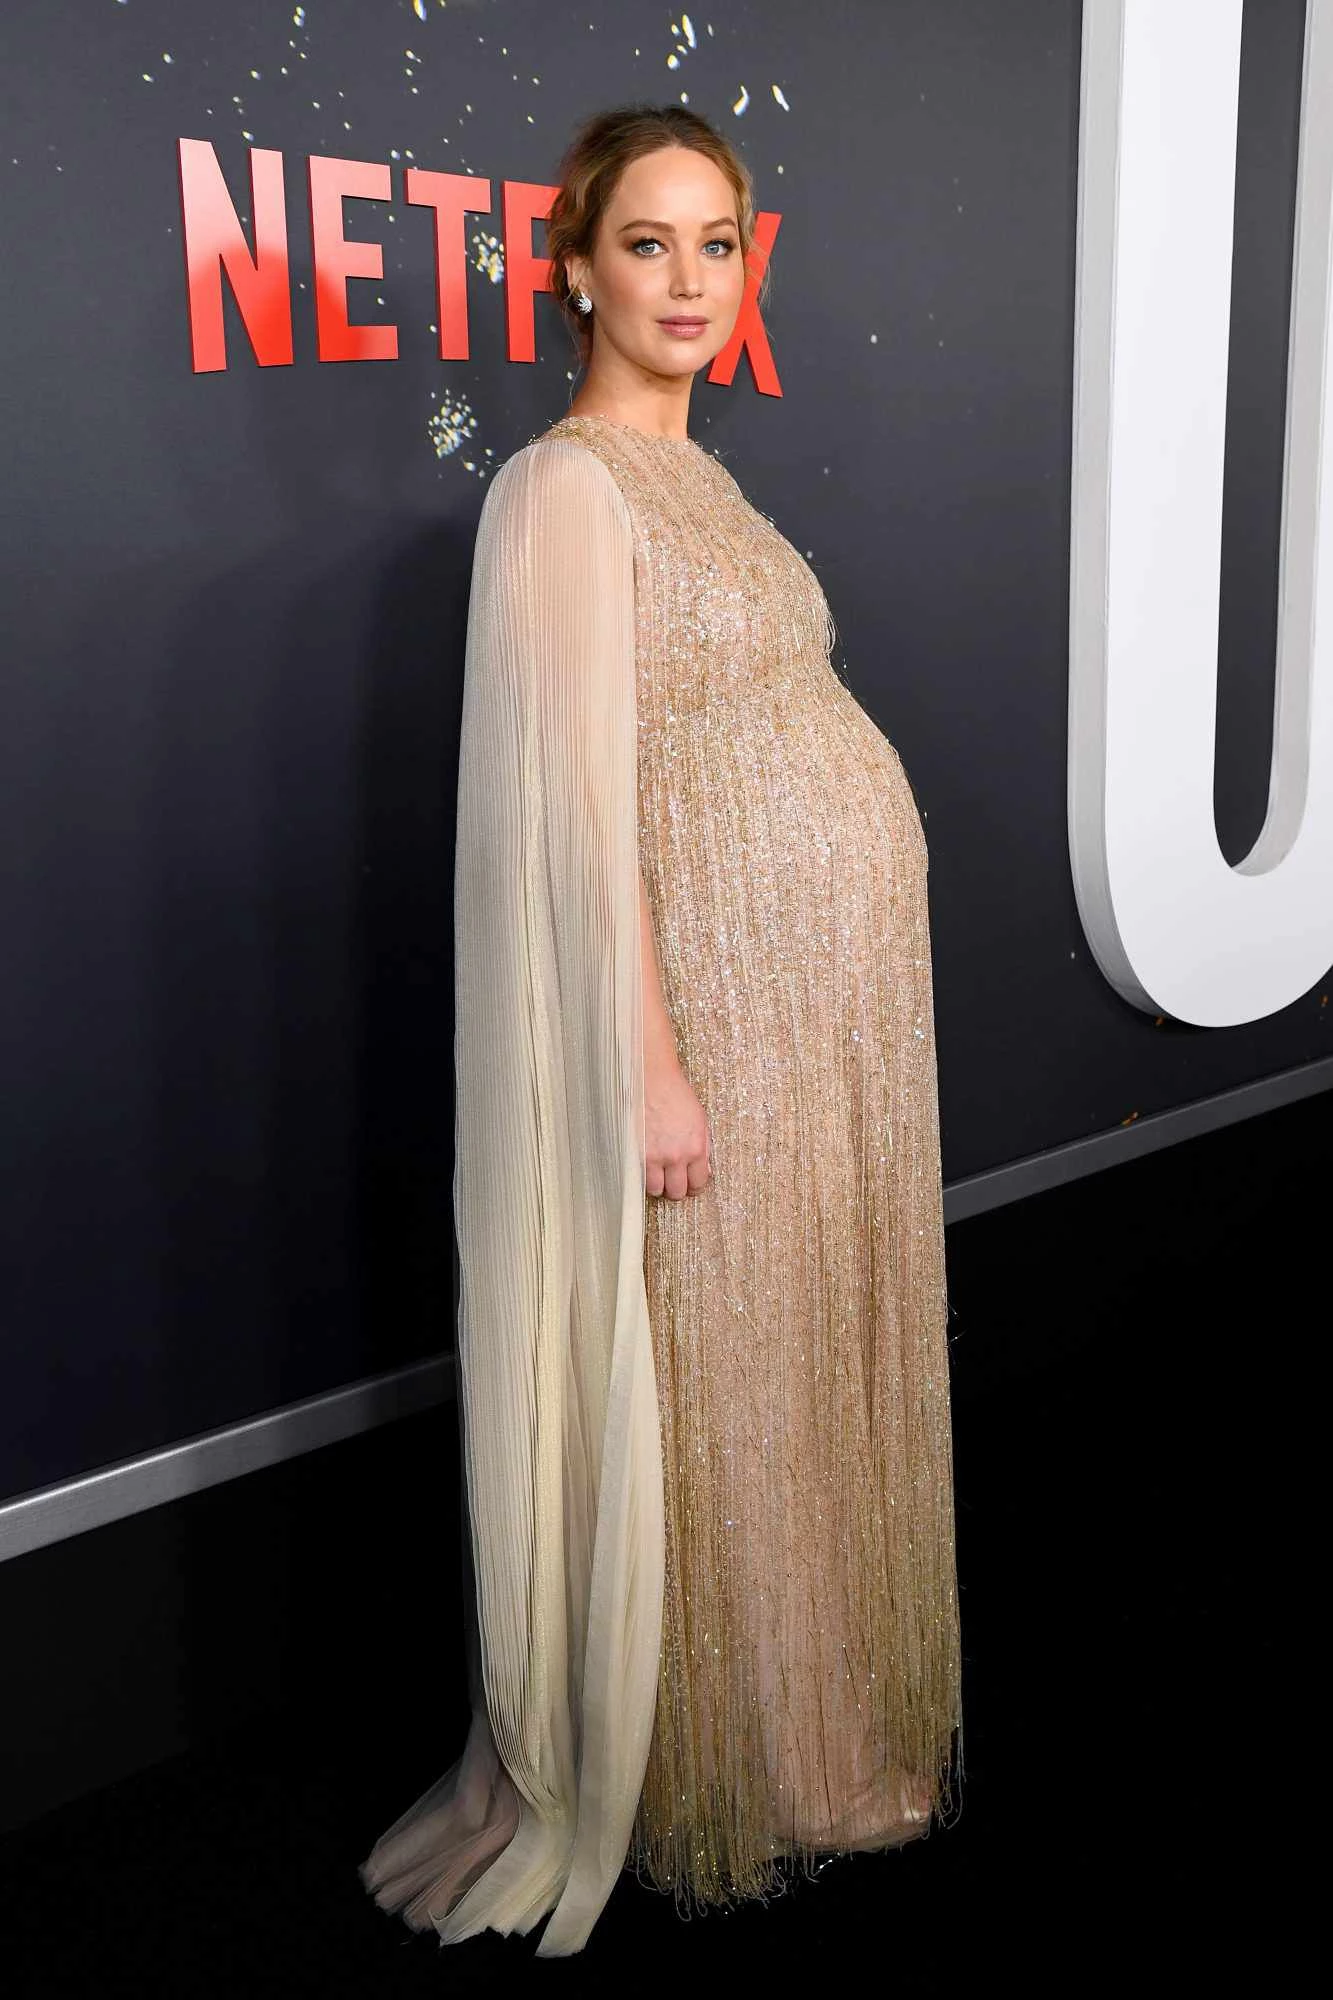 Jennifer Lawrence's 2021 Pregnancy Announcement